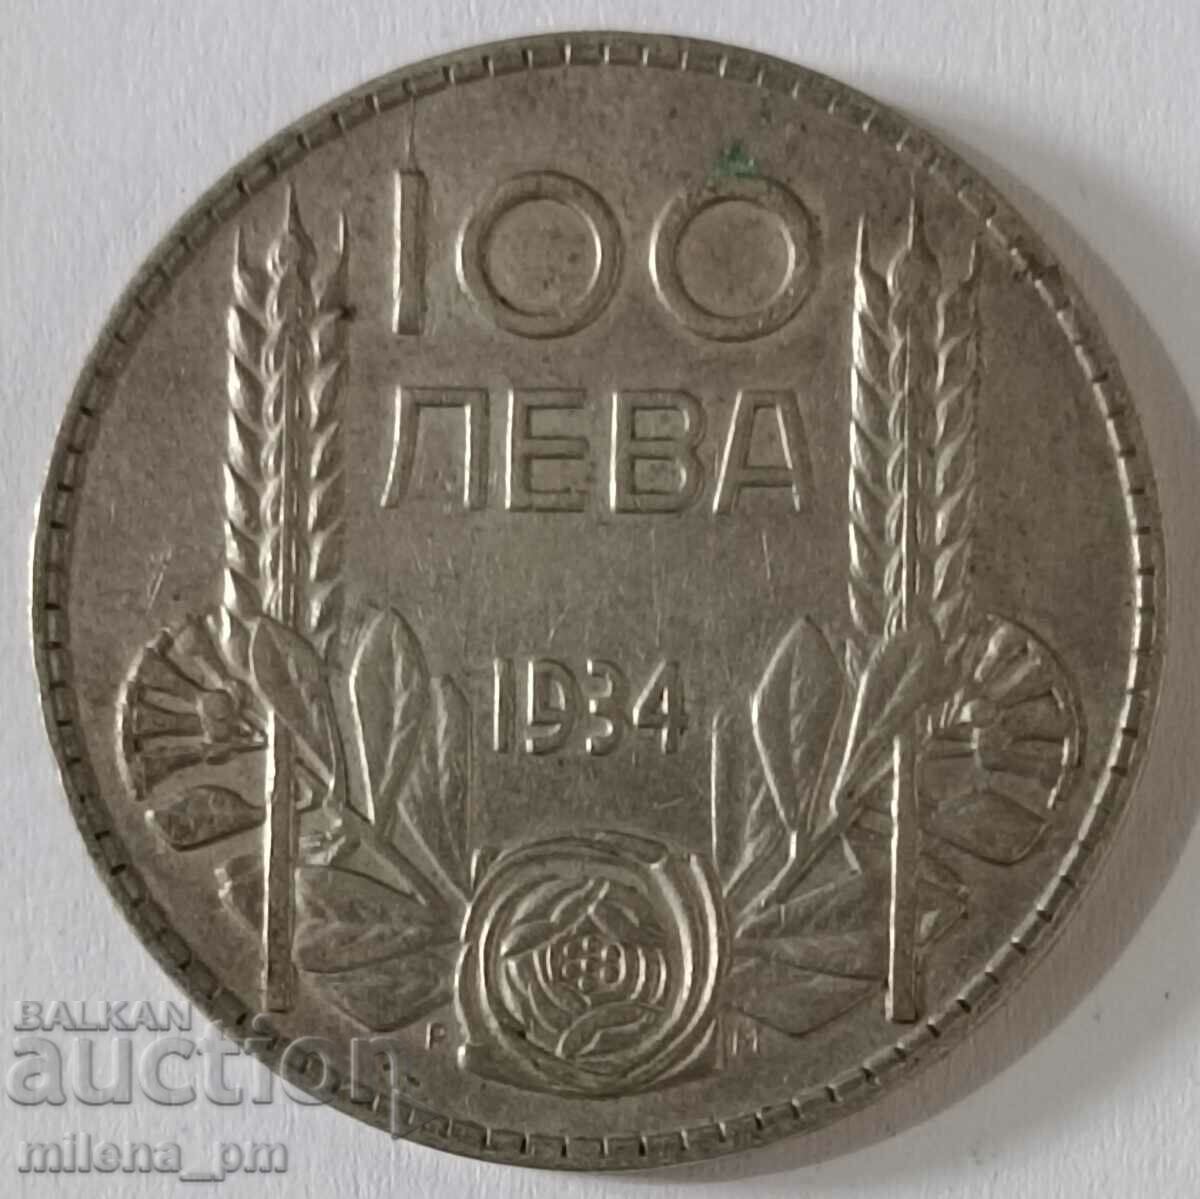 Coin 100 BGN 1934